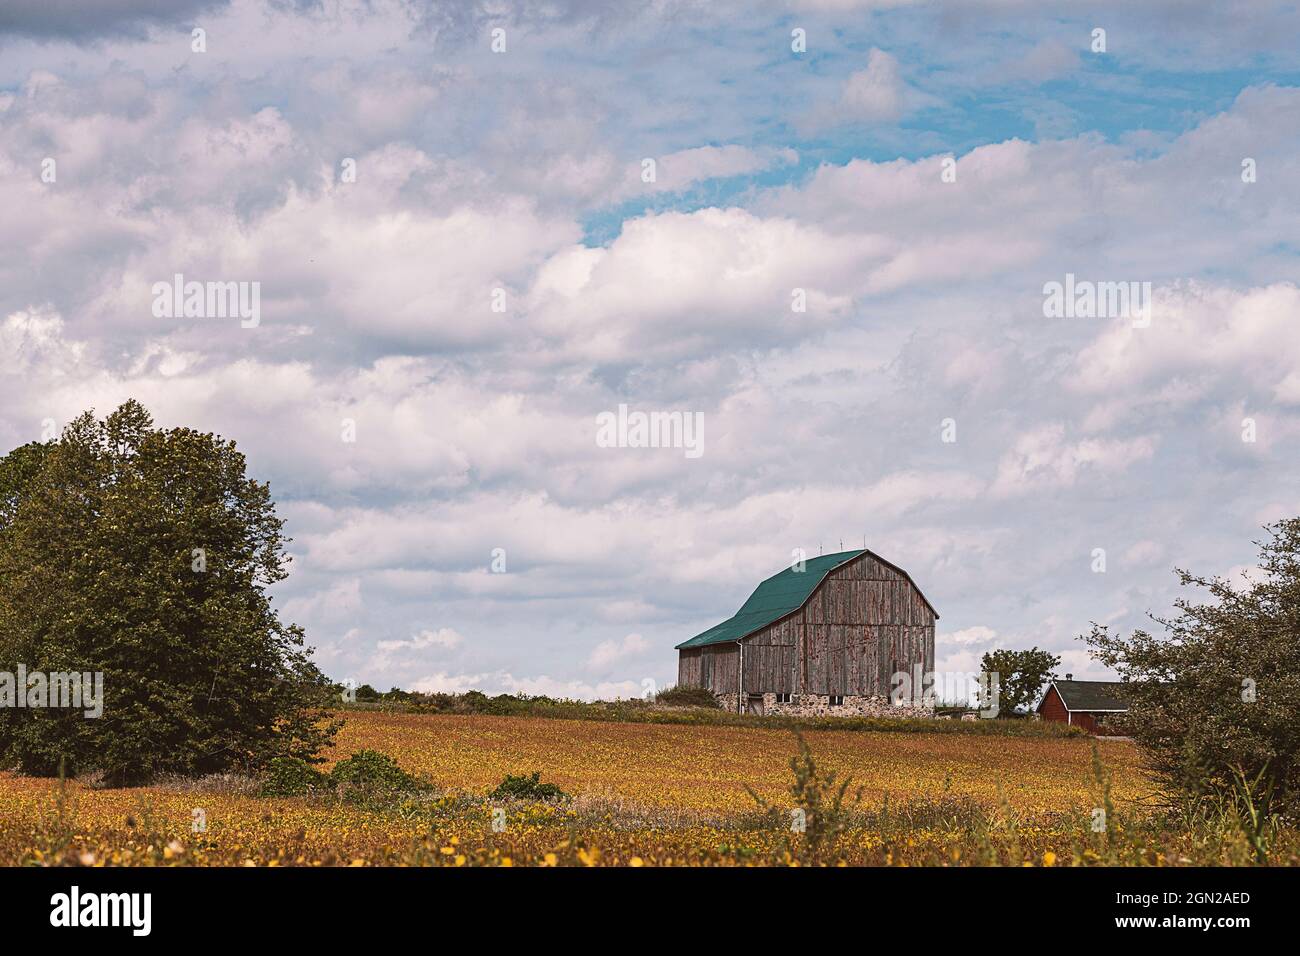 The Lone Barn - 3 Stock Photo